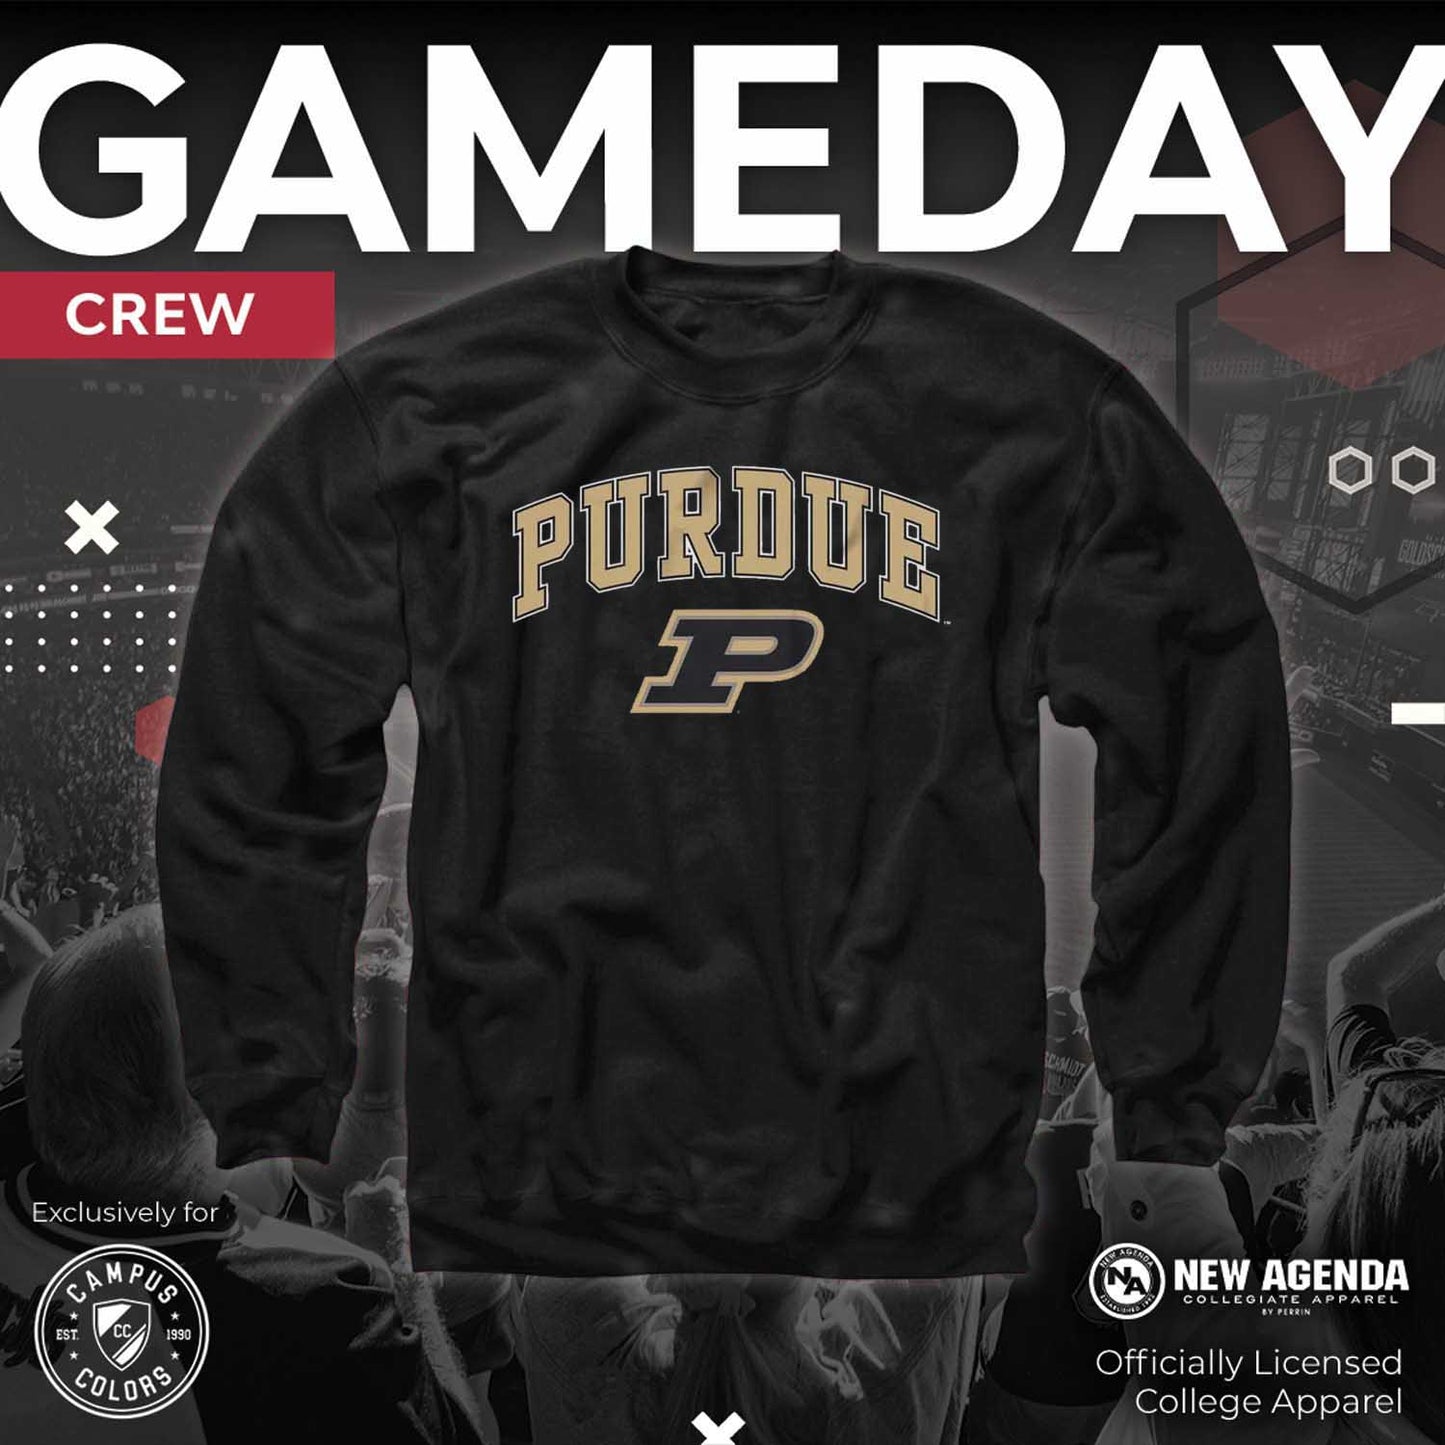 Purdue Boilermakers Campus Colors Adult Arch & Logo Soft Style Gameday Crewneck Sweatshirt  - Black